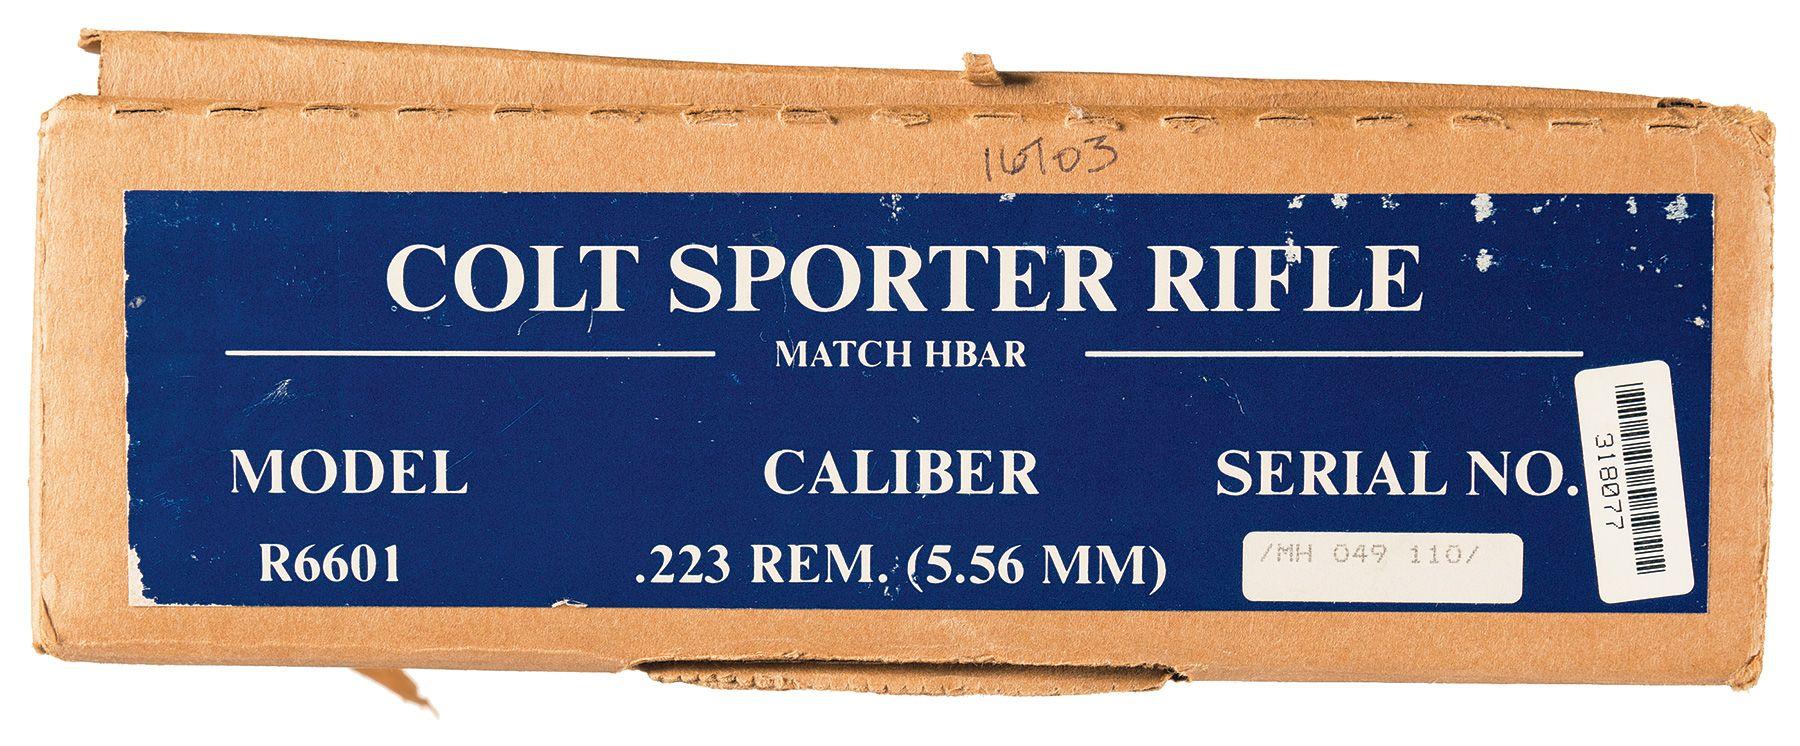 Colt Sporter Match HBAR Semi-Automatic Rifle